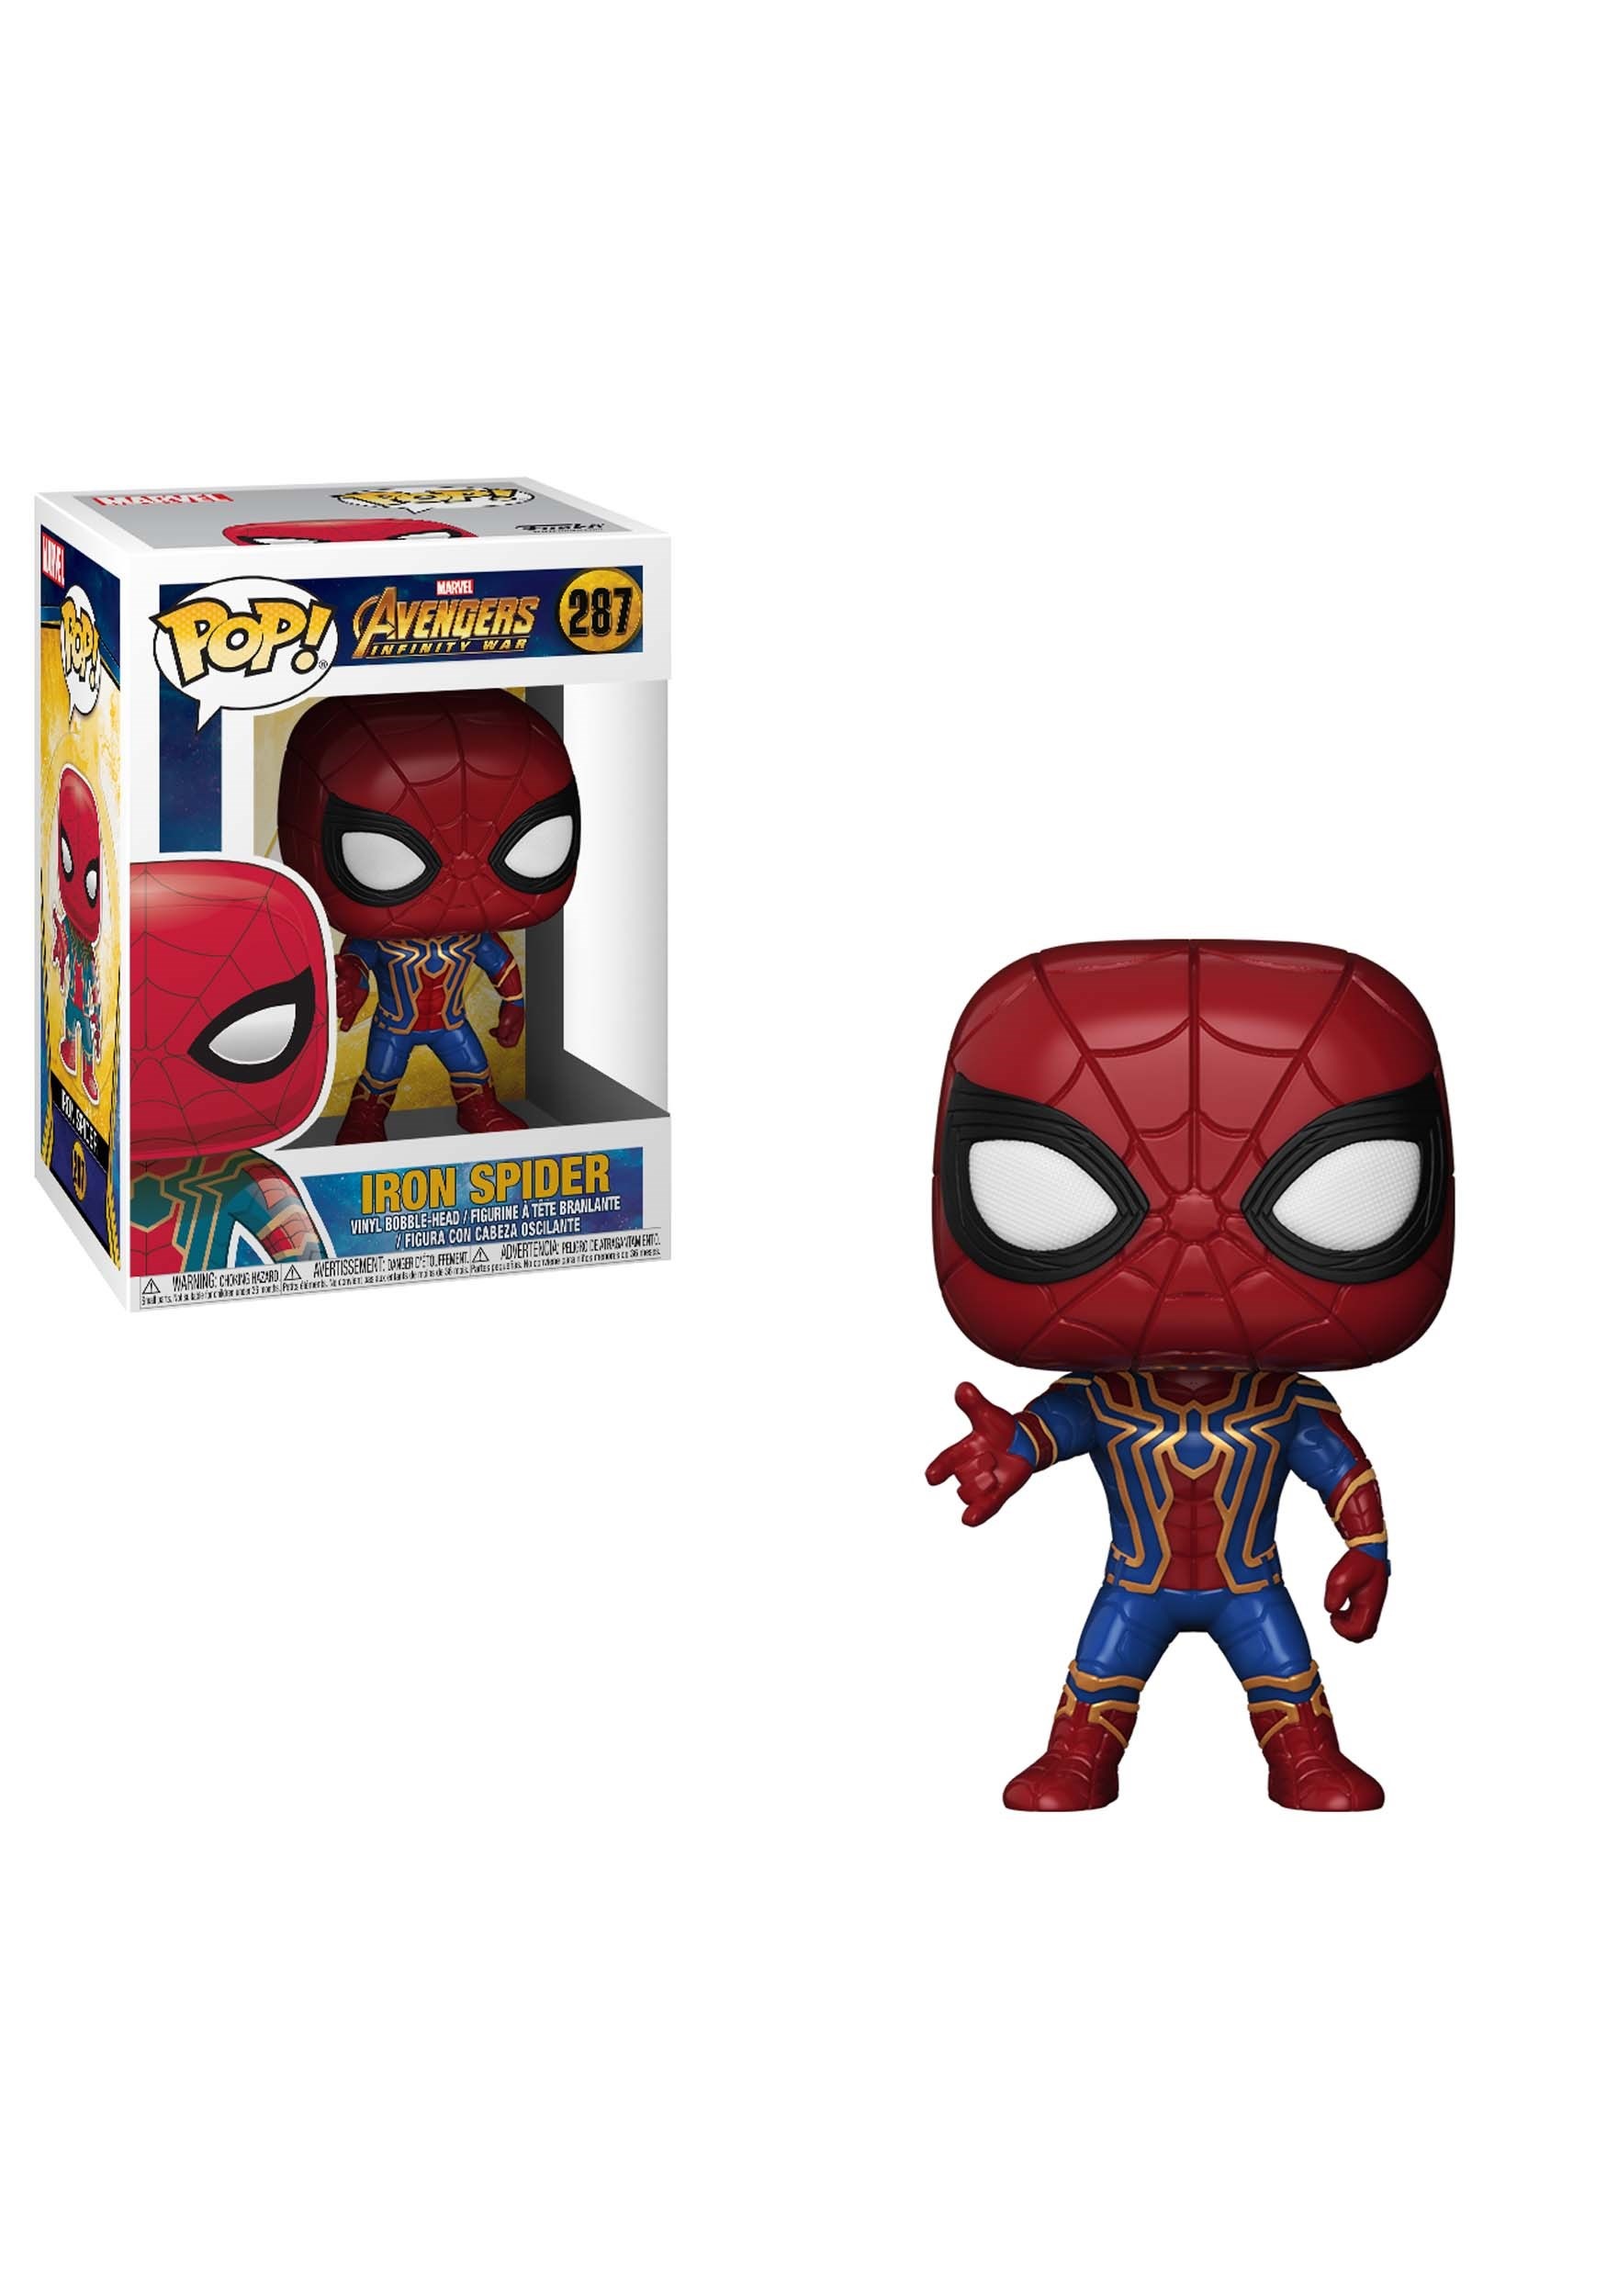 Funko POP! Marvel: Avengers Infinity War Iron Spider Bobblehead Figure